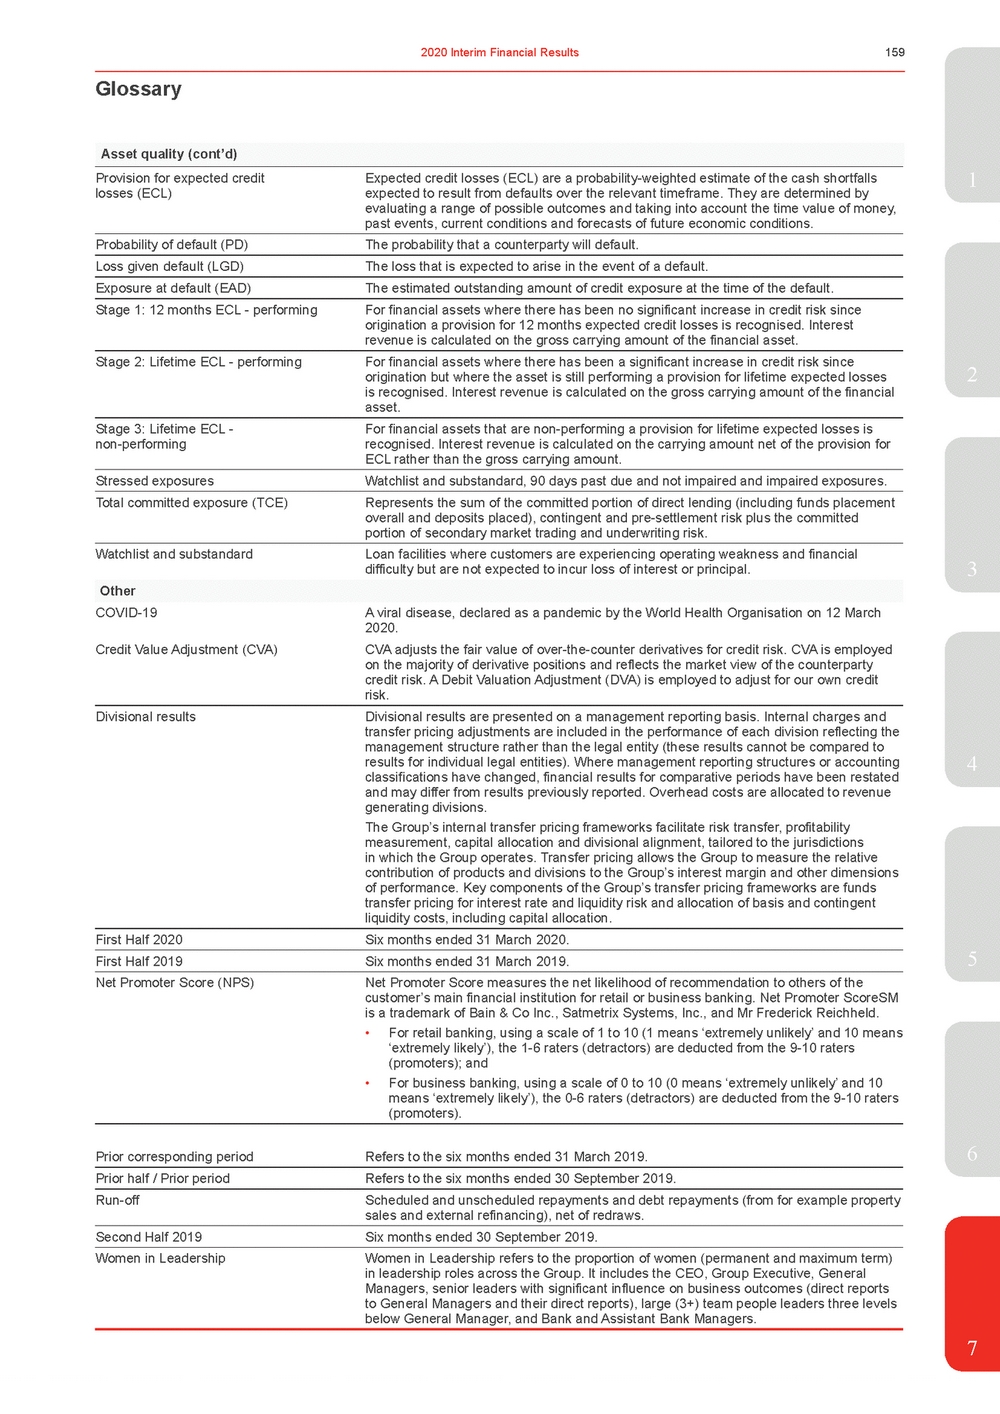 11676-3-ex1_westpac 2020 interim financial results announcement_page_164.jpg